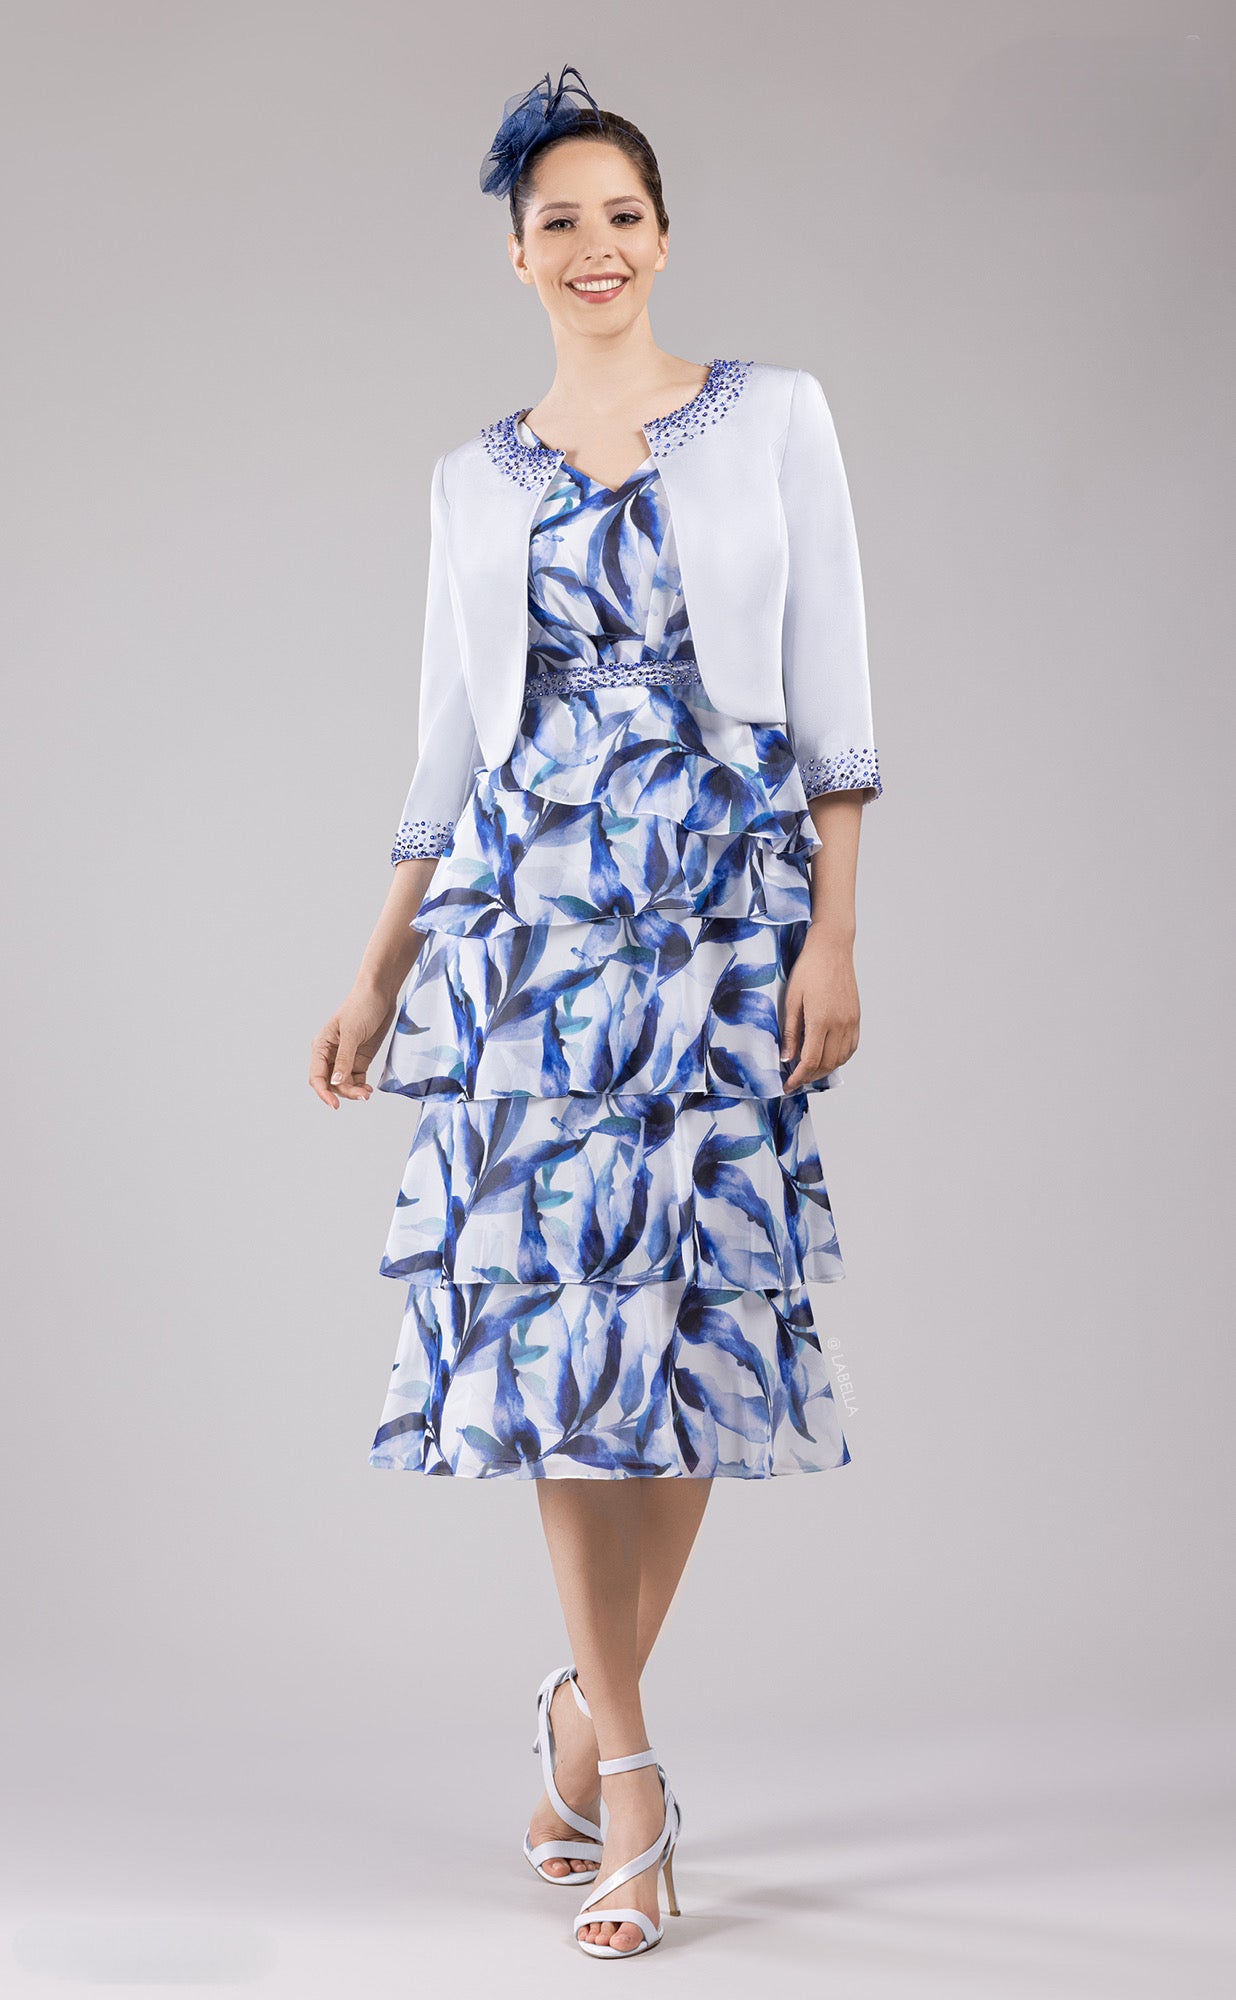 2 Piece Dress with Royal Blue Print and Bolero Style Jacket